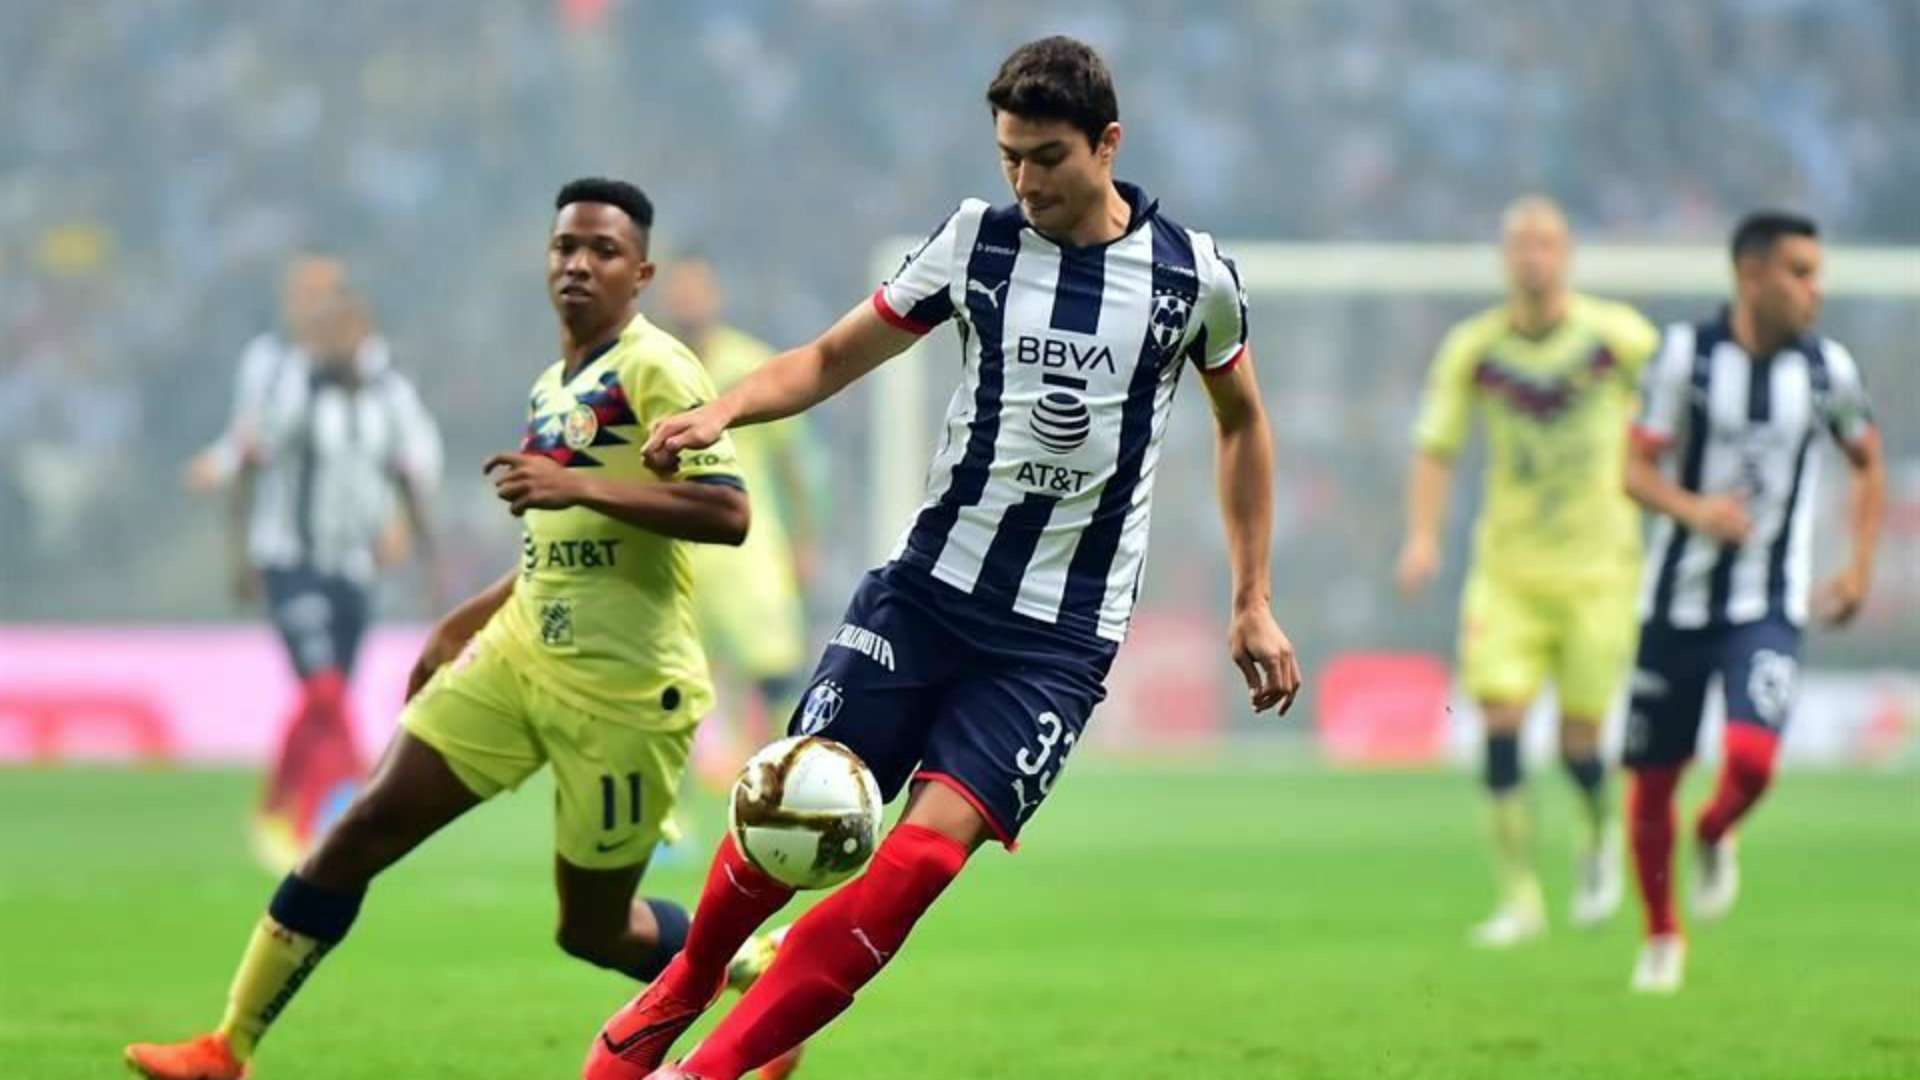 Stefan Medina Monterrey vs América Apertura 2019